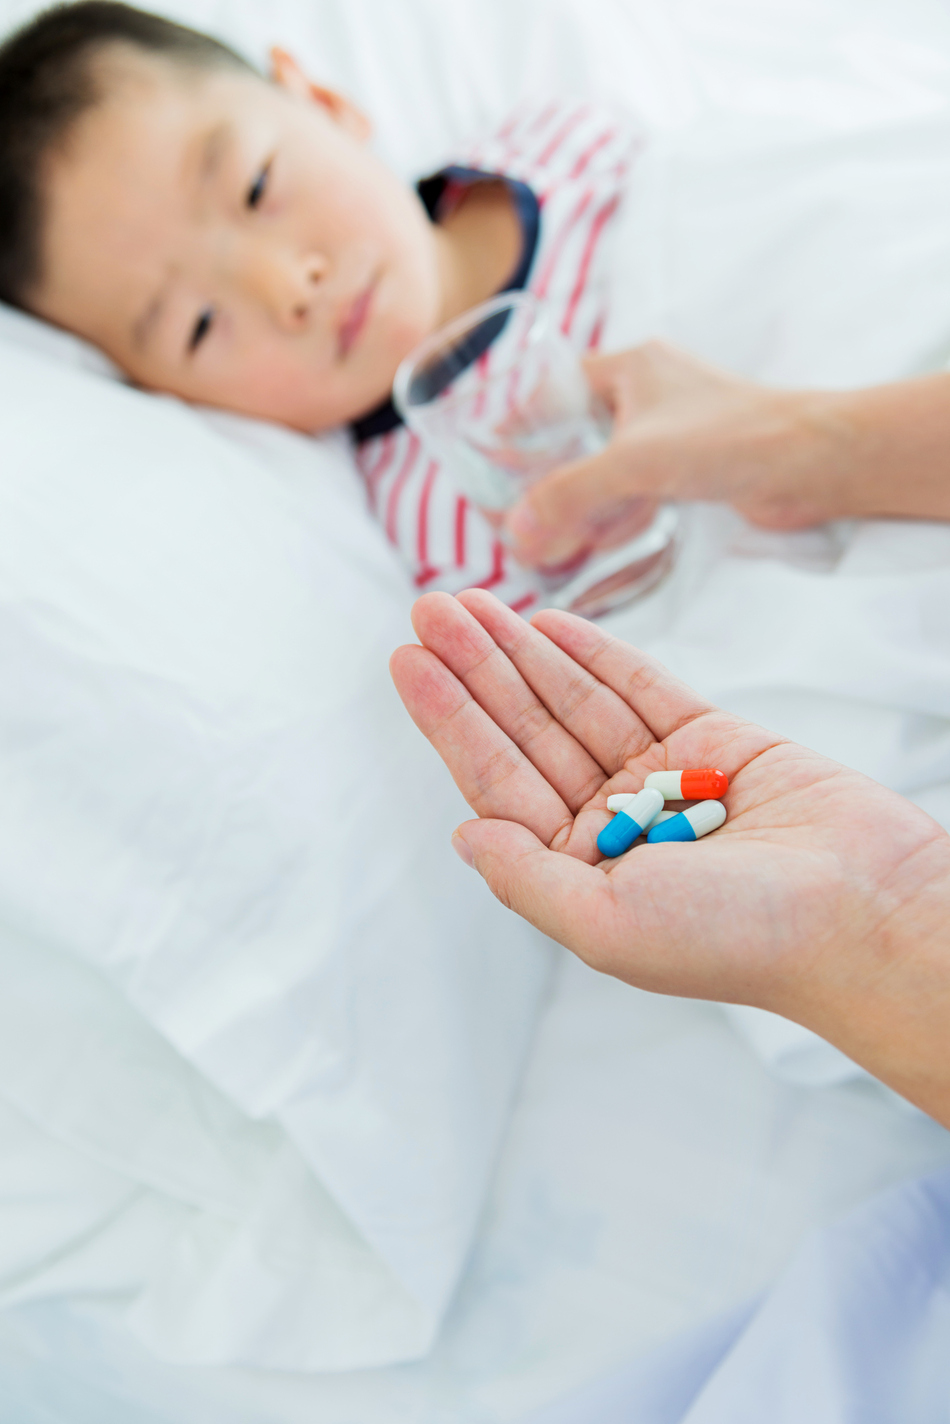 Overusing Antibiotics Can Hurt Your Child